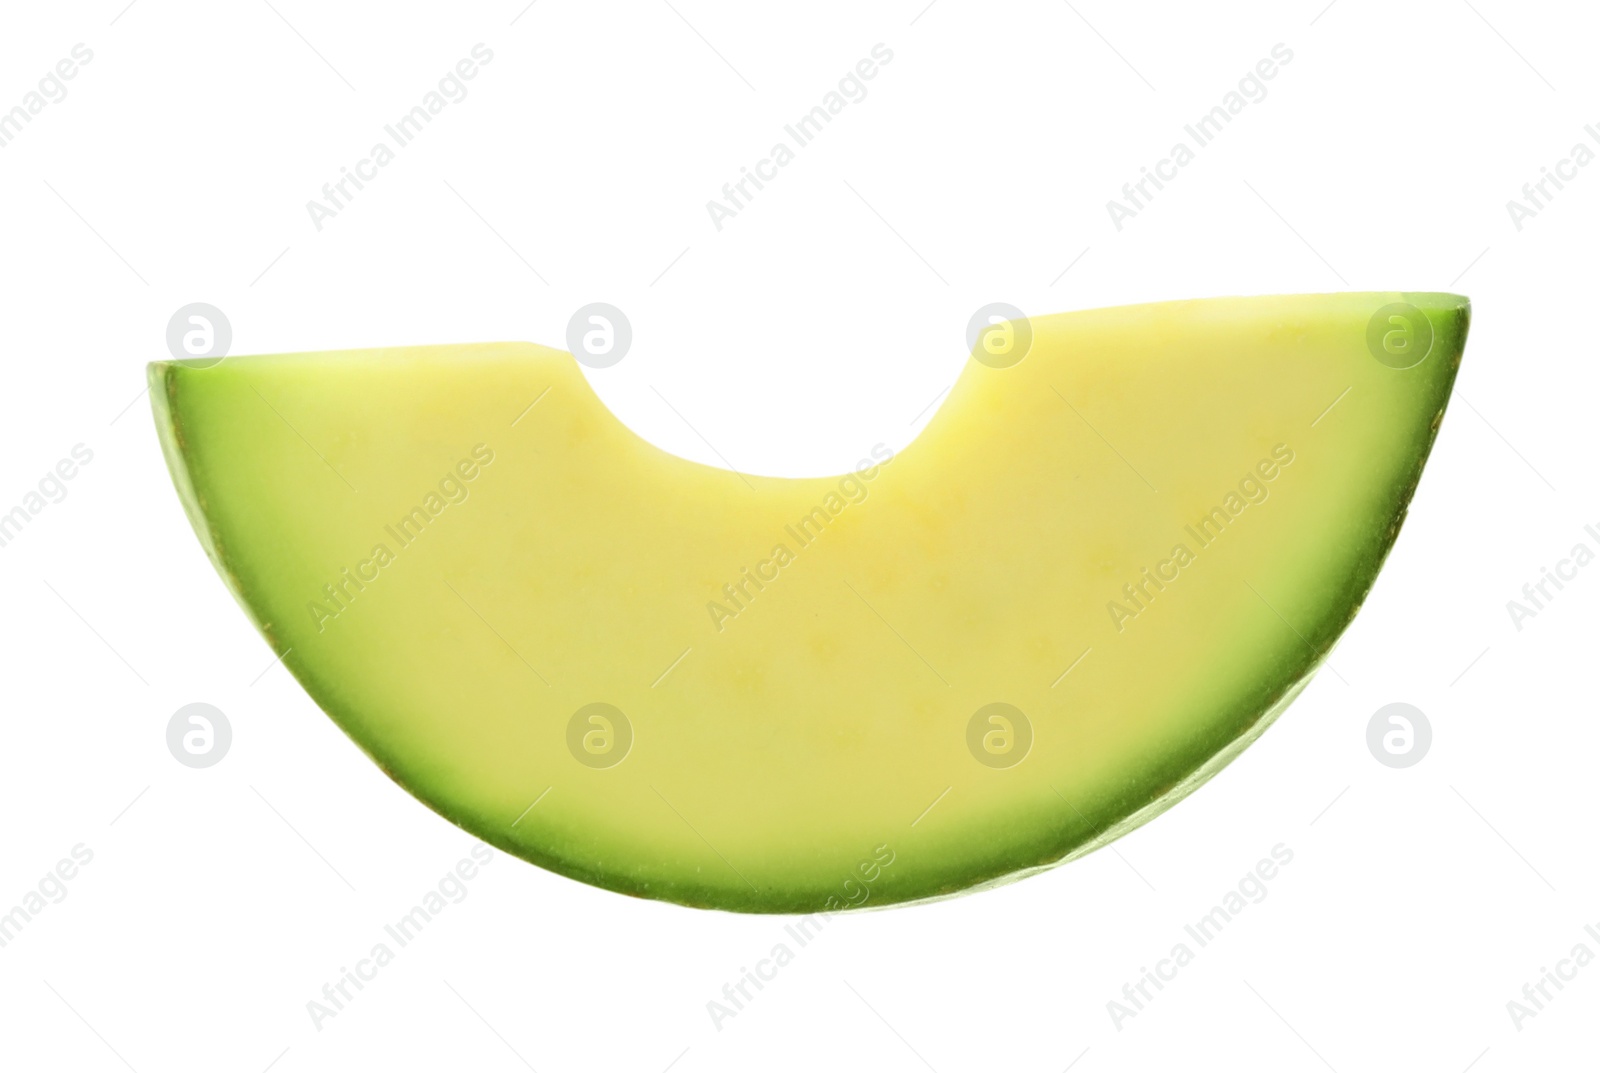 Photo of Slice of tasty ripe avocado isolated on white